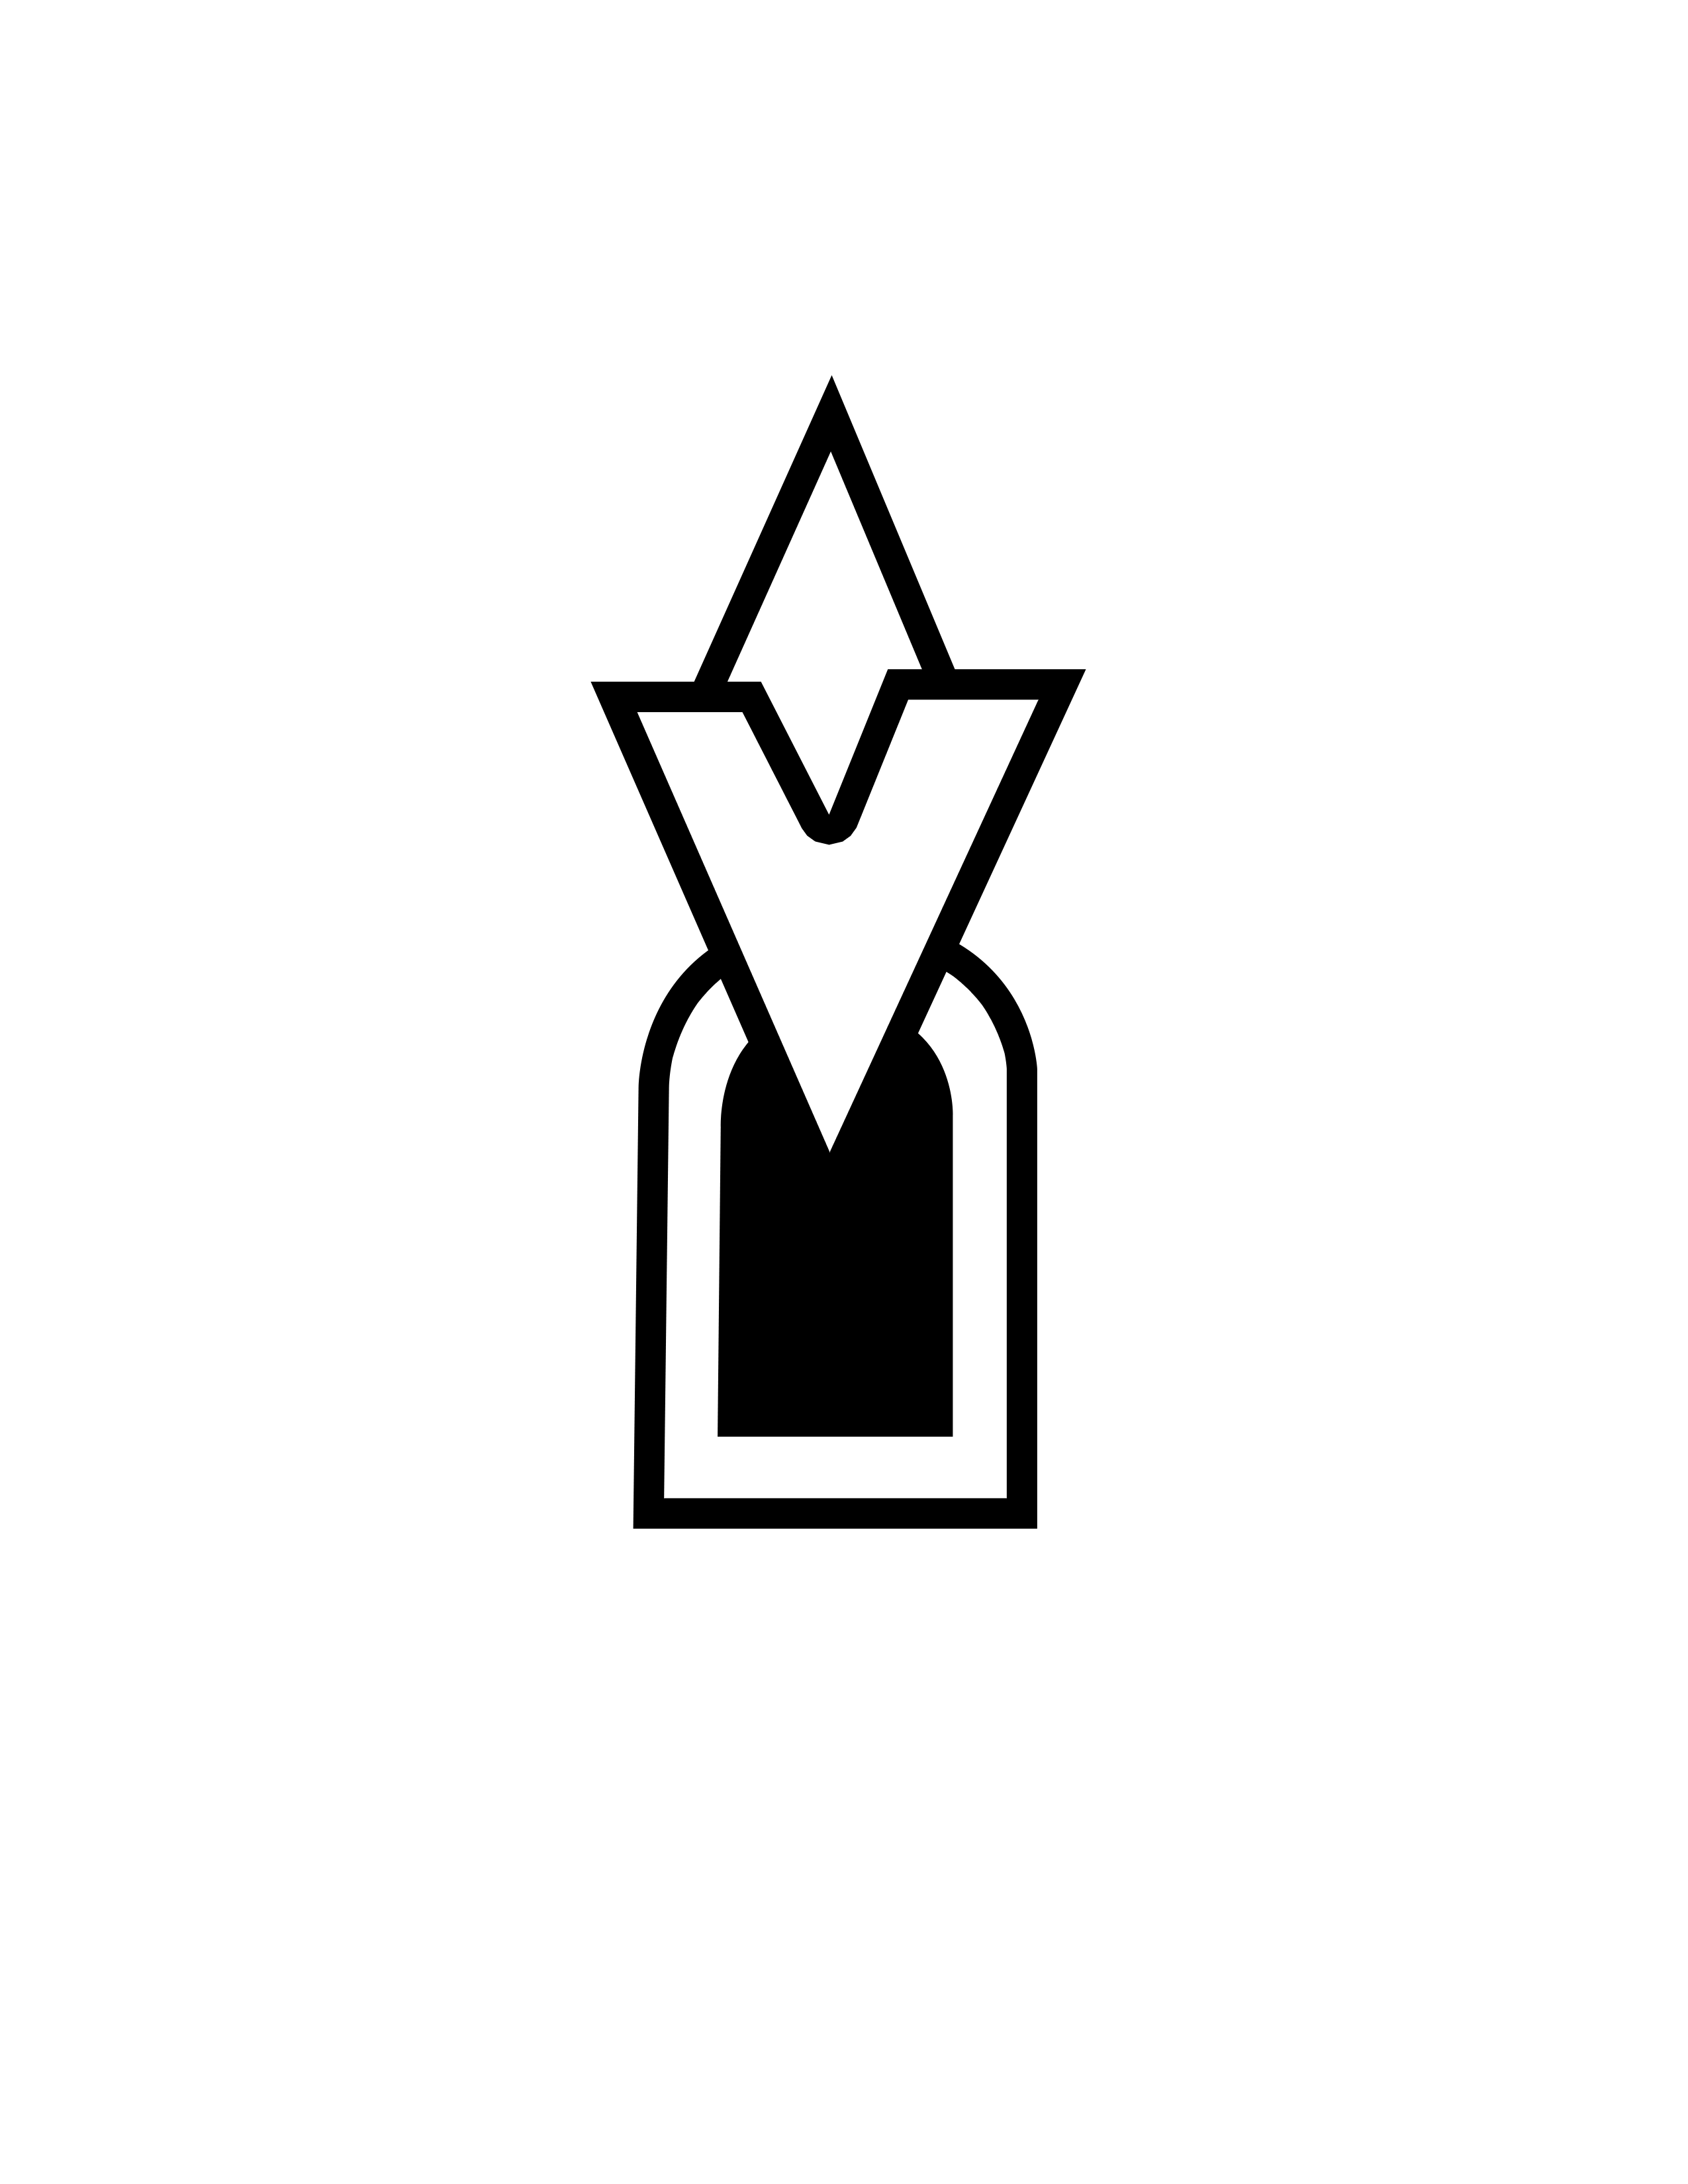 Logo,Symbol,Line art,Graphics